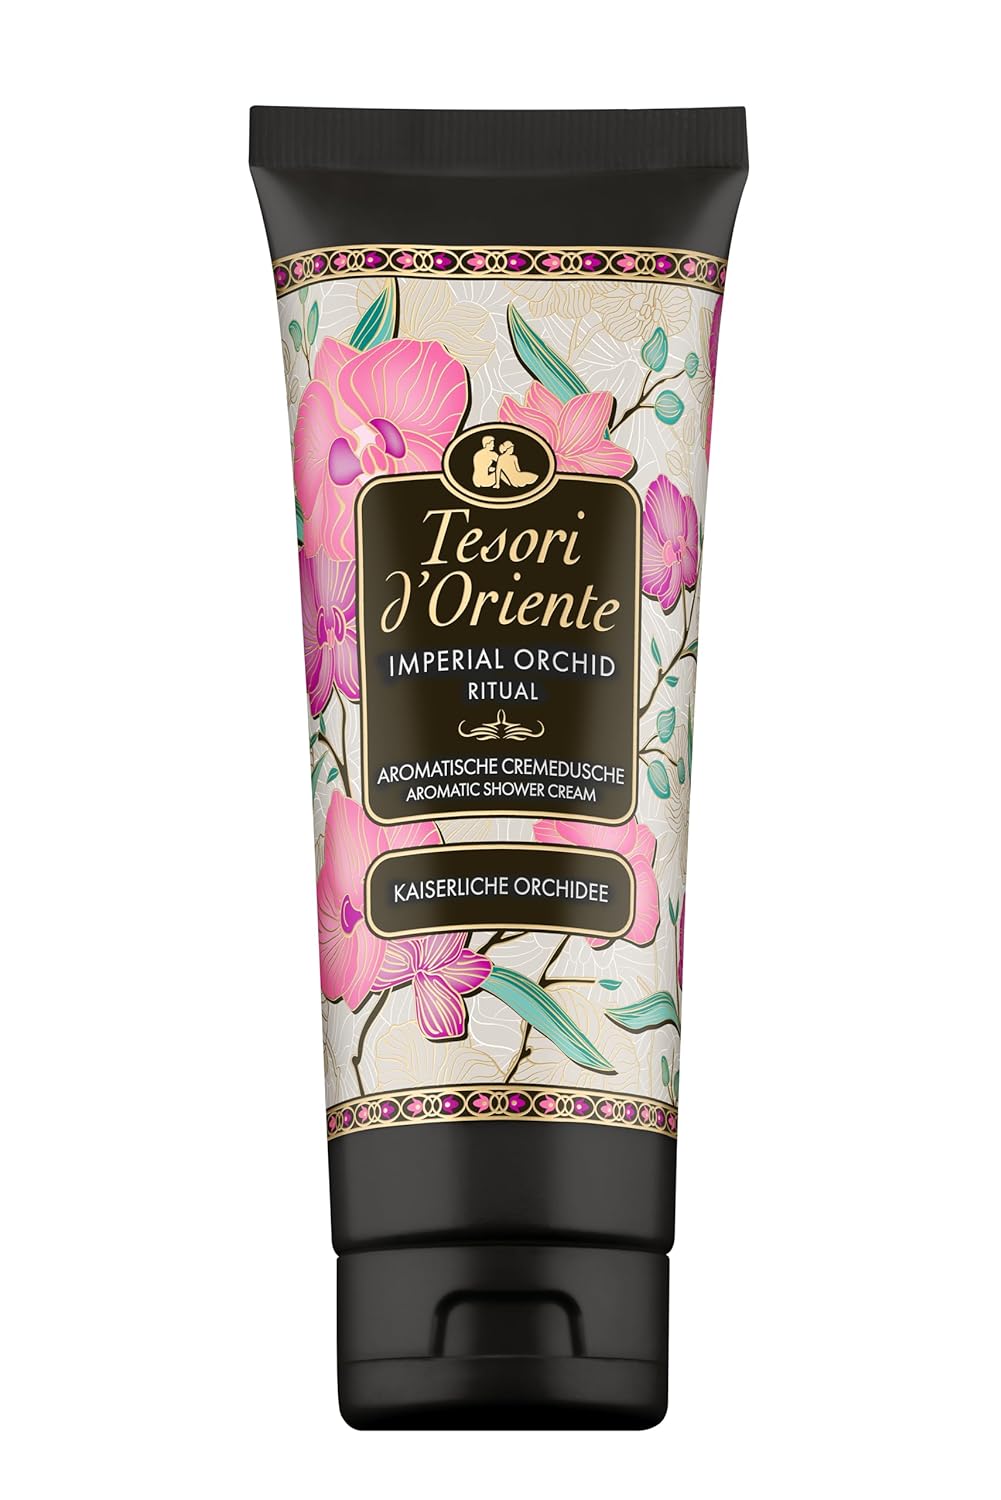 TESORI D\'ORIENTE Imperial Orchid Cream Shower, 250 ml, Aromatic Shower Gel with Imperial Orchid, Wellness Rituals for Body and Senses